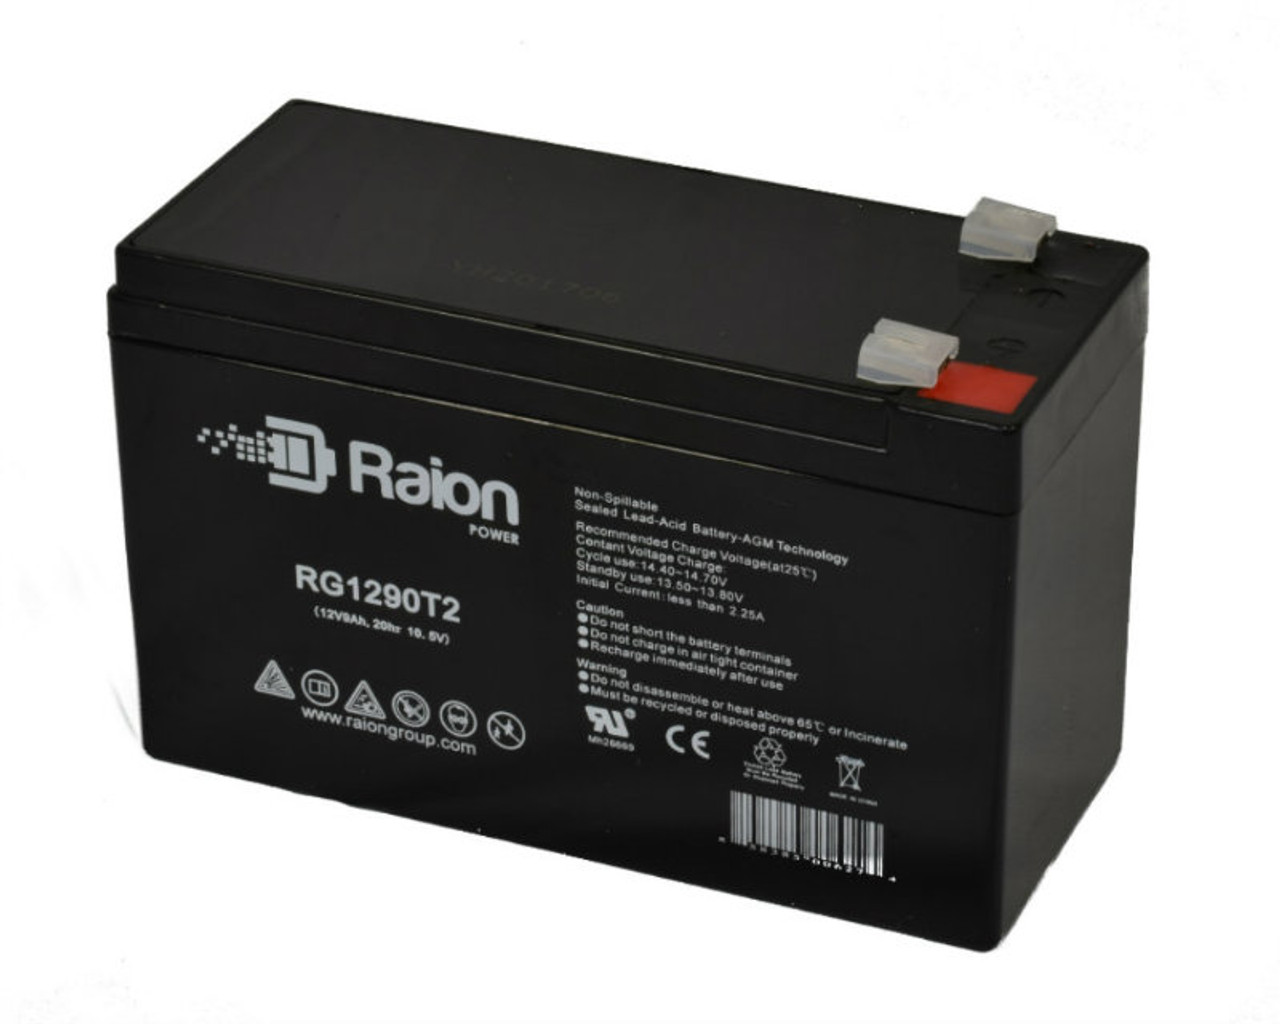 Raion Power Replacement 12V 9Ah Emergency Light Battery for Trio Lightning TL930219 - 1 Pack